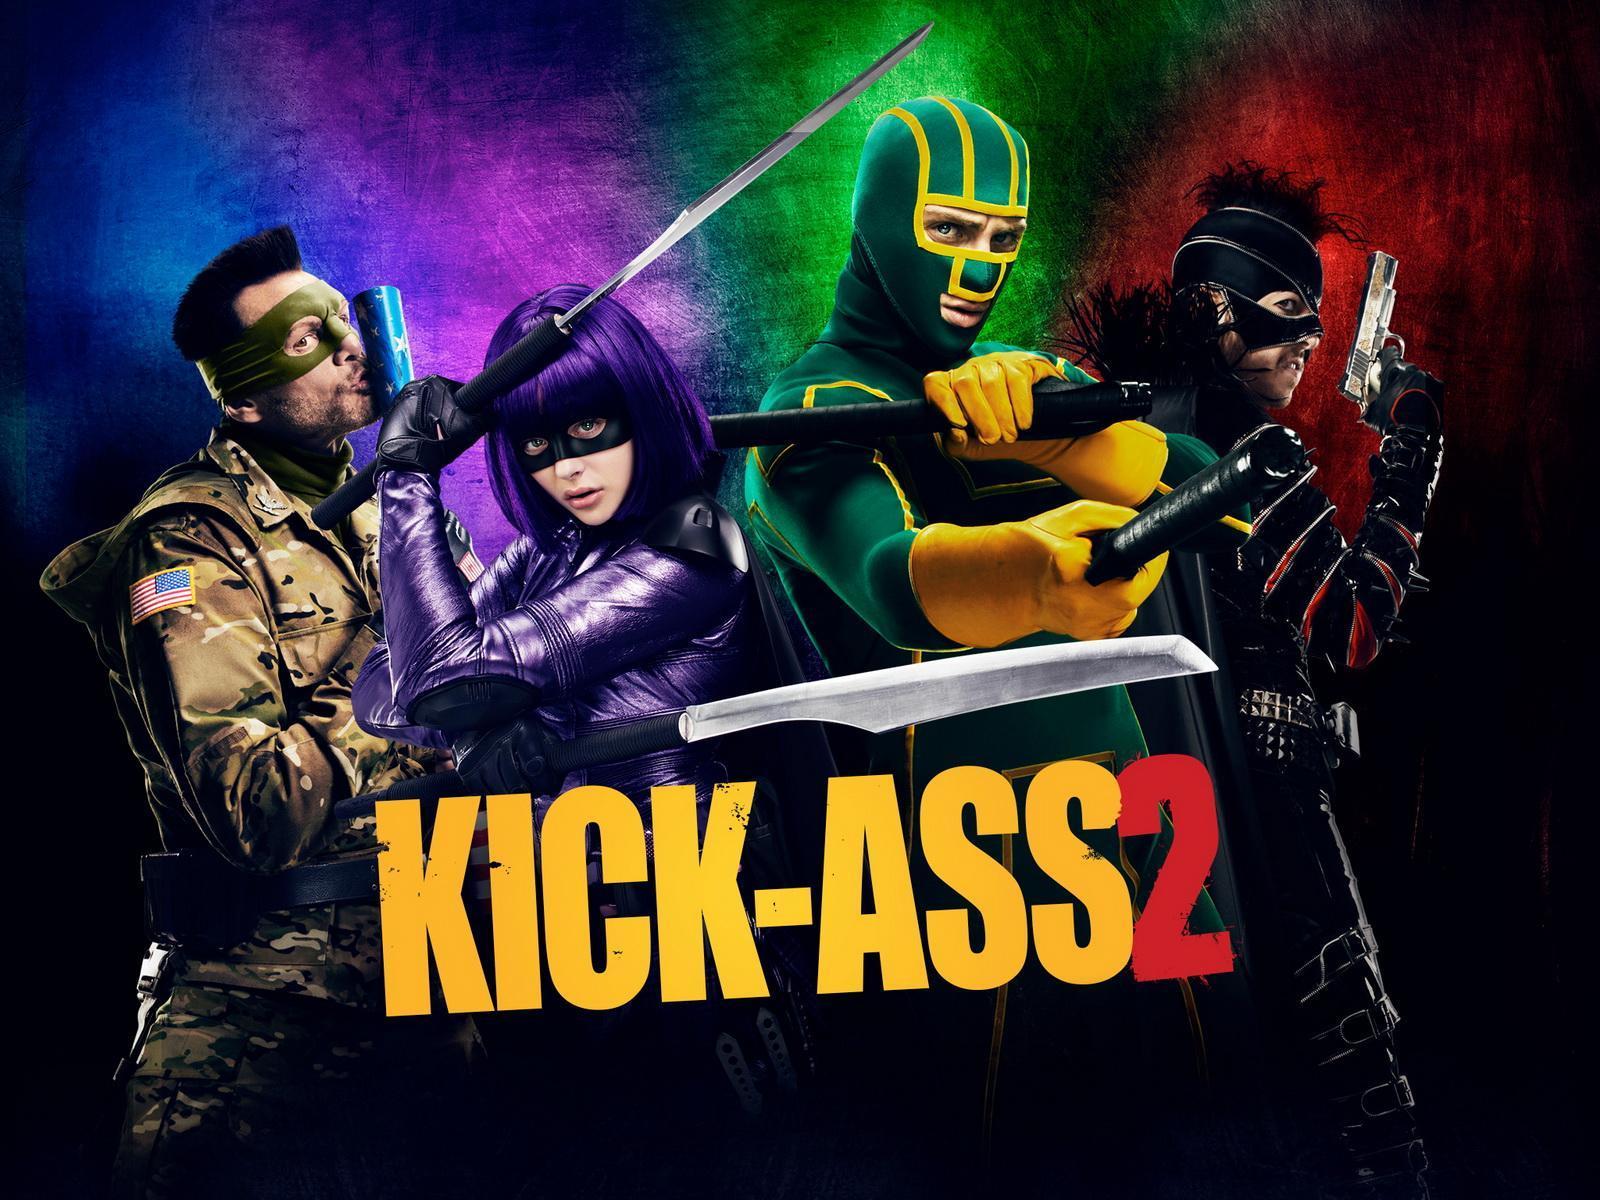 Kick Ass 2 Balls to the Wall Windows 8 Movies Theme. Download